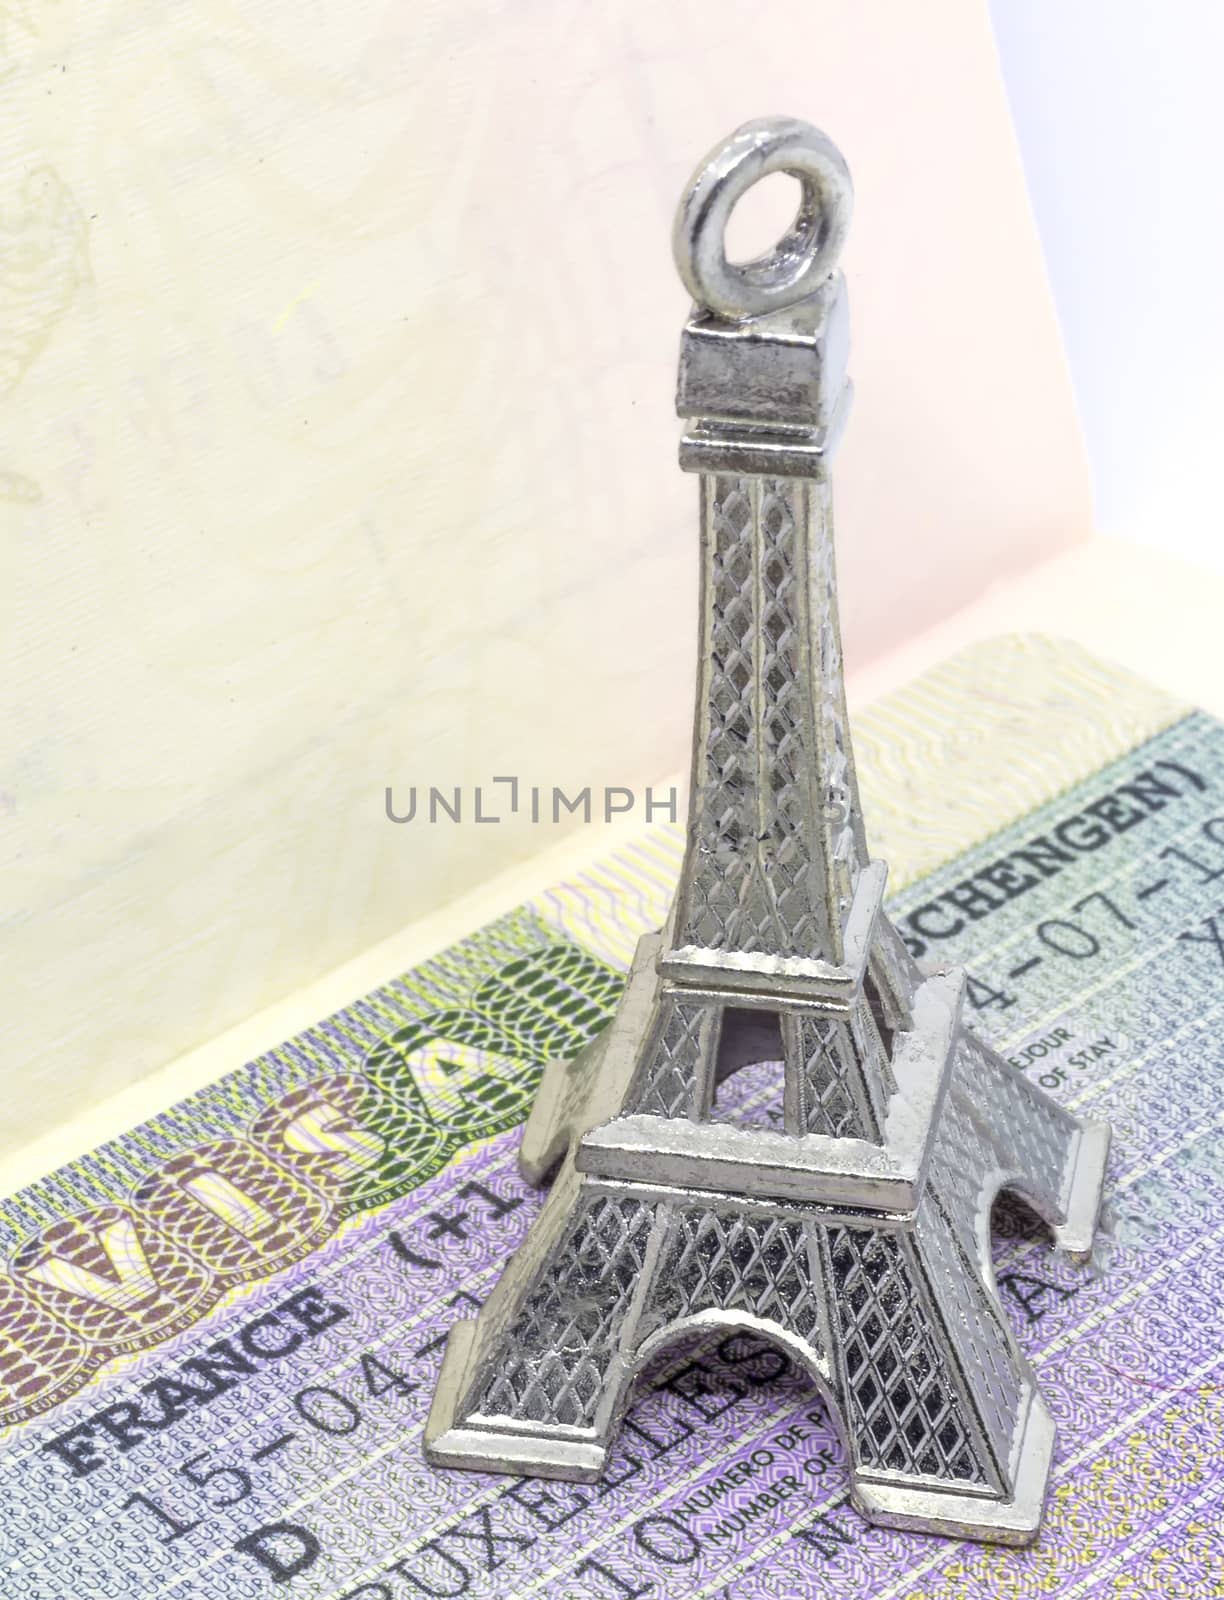 Close up of the Eiffel tower keychain on the Schengen visa allowing the passport holder to travel inside the Schengen treaty territory by ankorlight